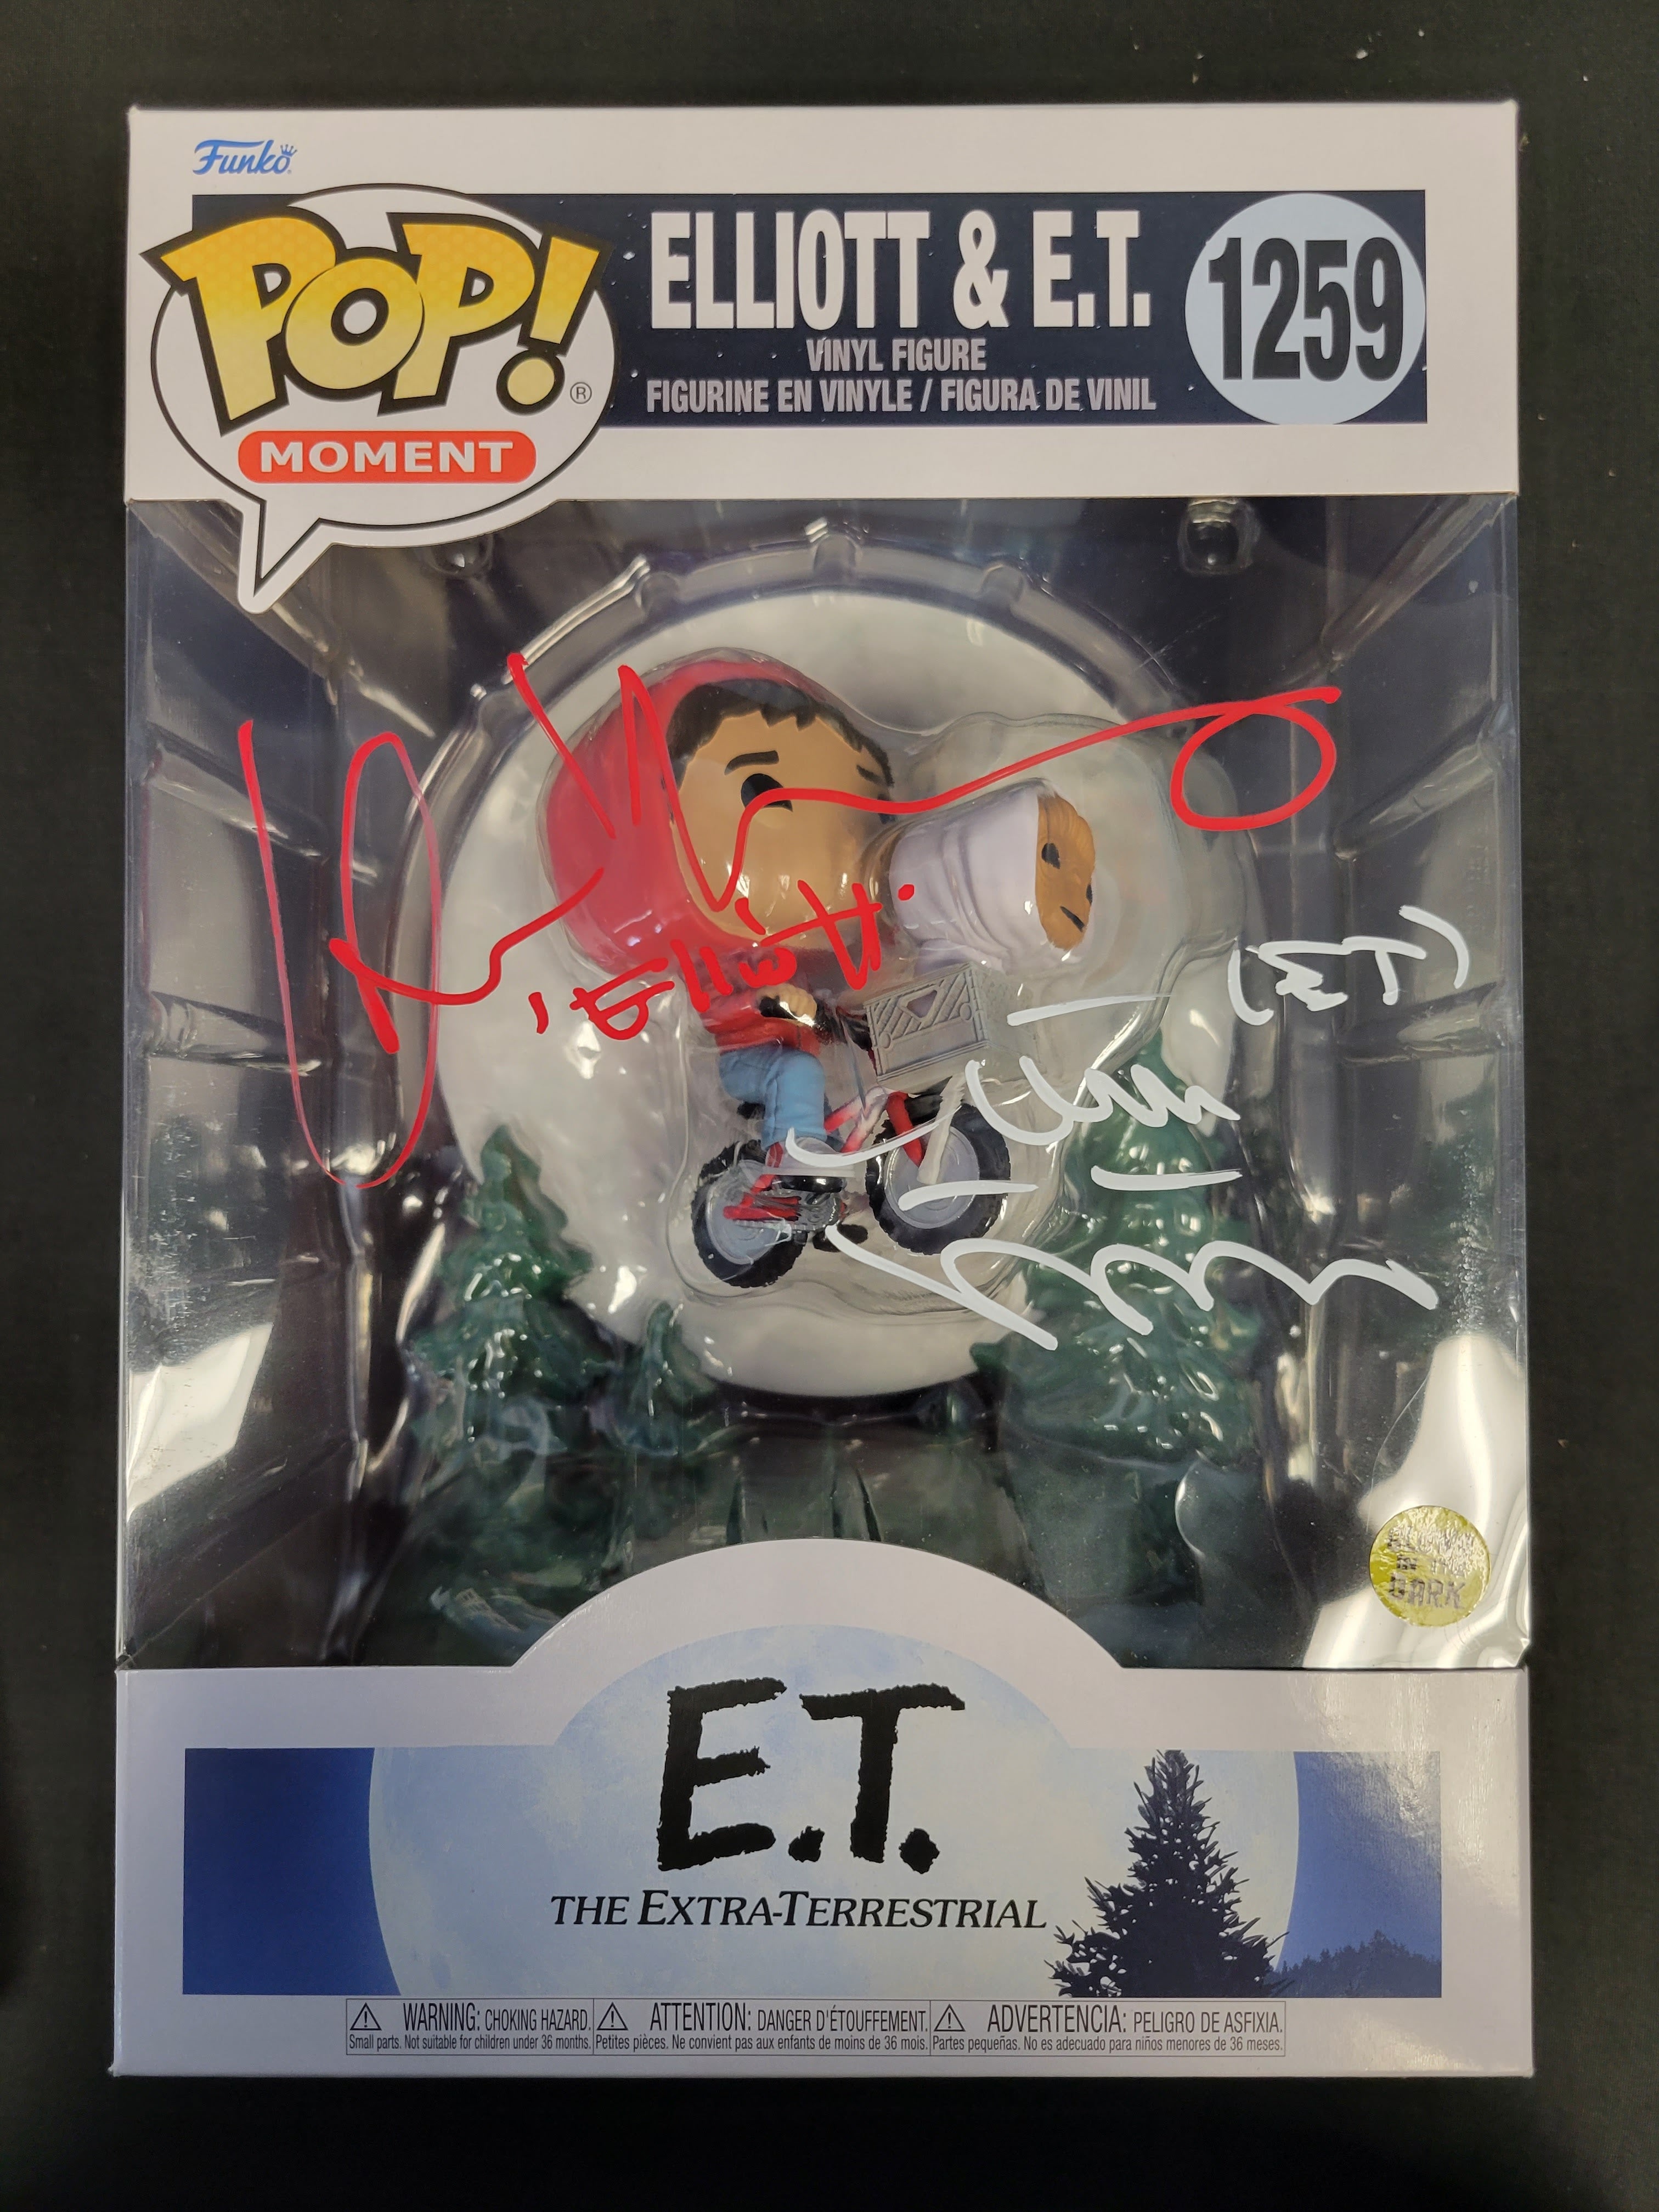 Funko Pop: E.T. The Extra-Terrestrial: Elliott & E.T. Autographed Moment